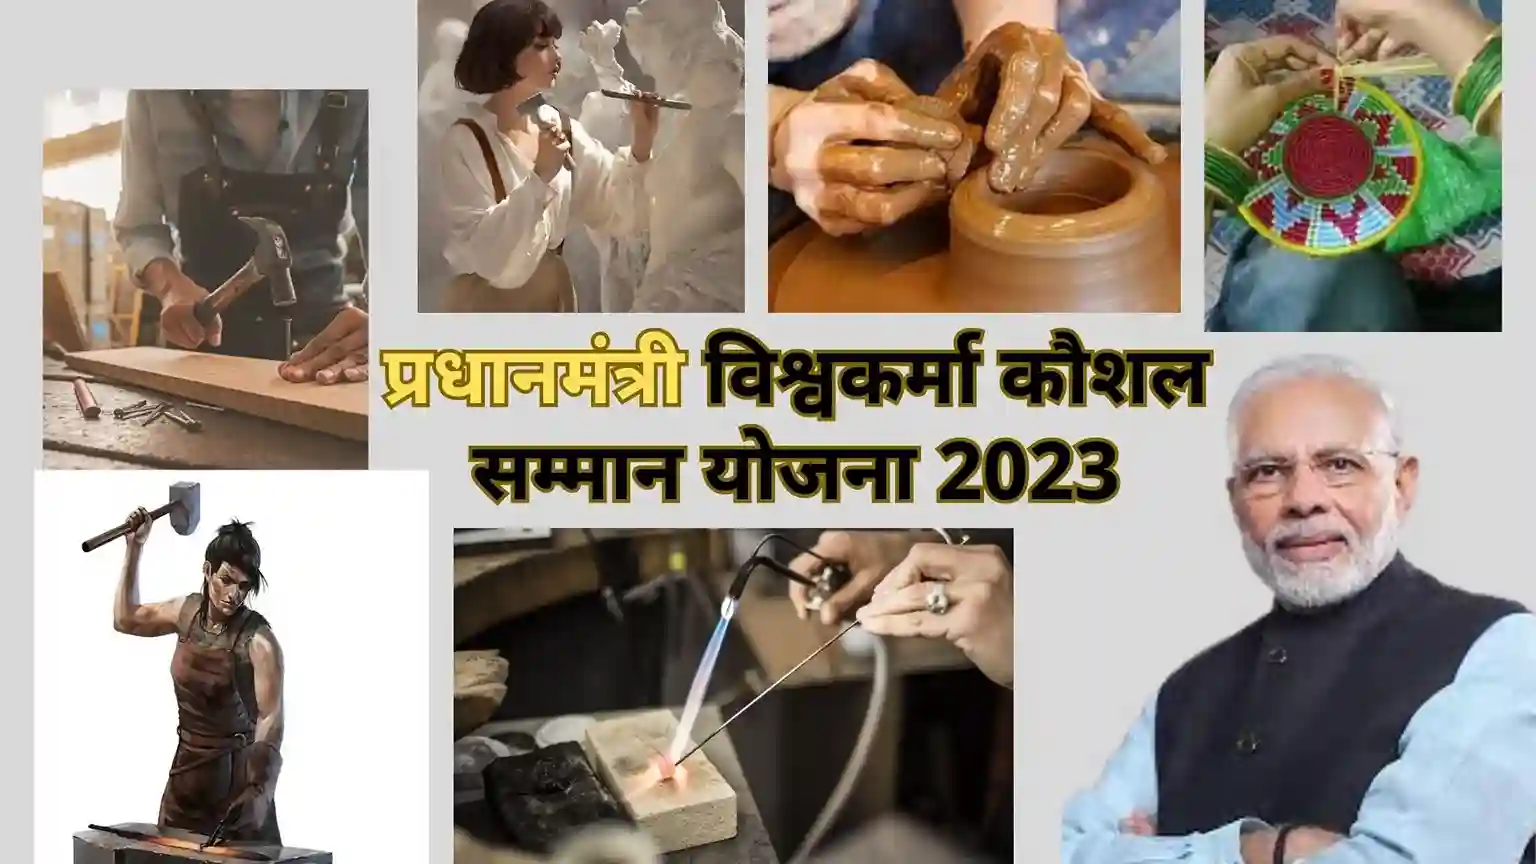 Vishwakarma Kaushal Samman Yojana 2023: प्रधानमंत्री विश्वकर्मा कौशल सम्मान योजना लाभ, योग्यता और आवेदन प्रक्रिया